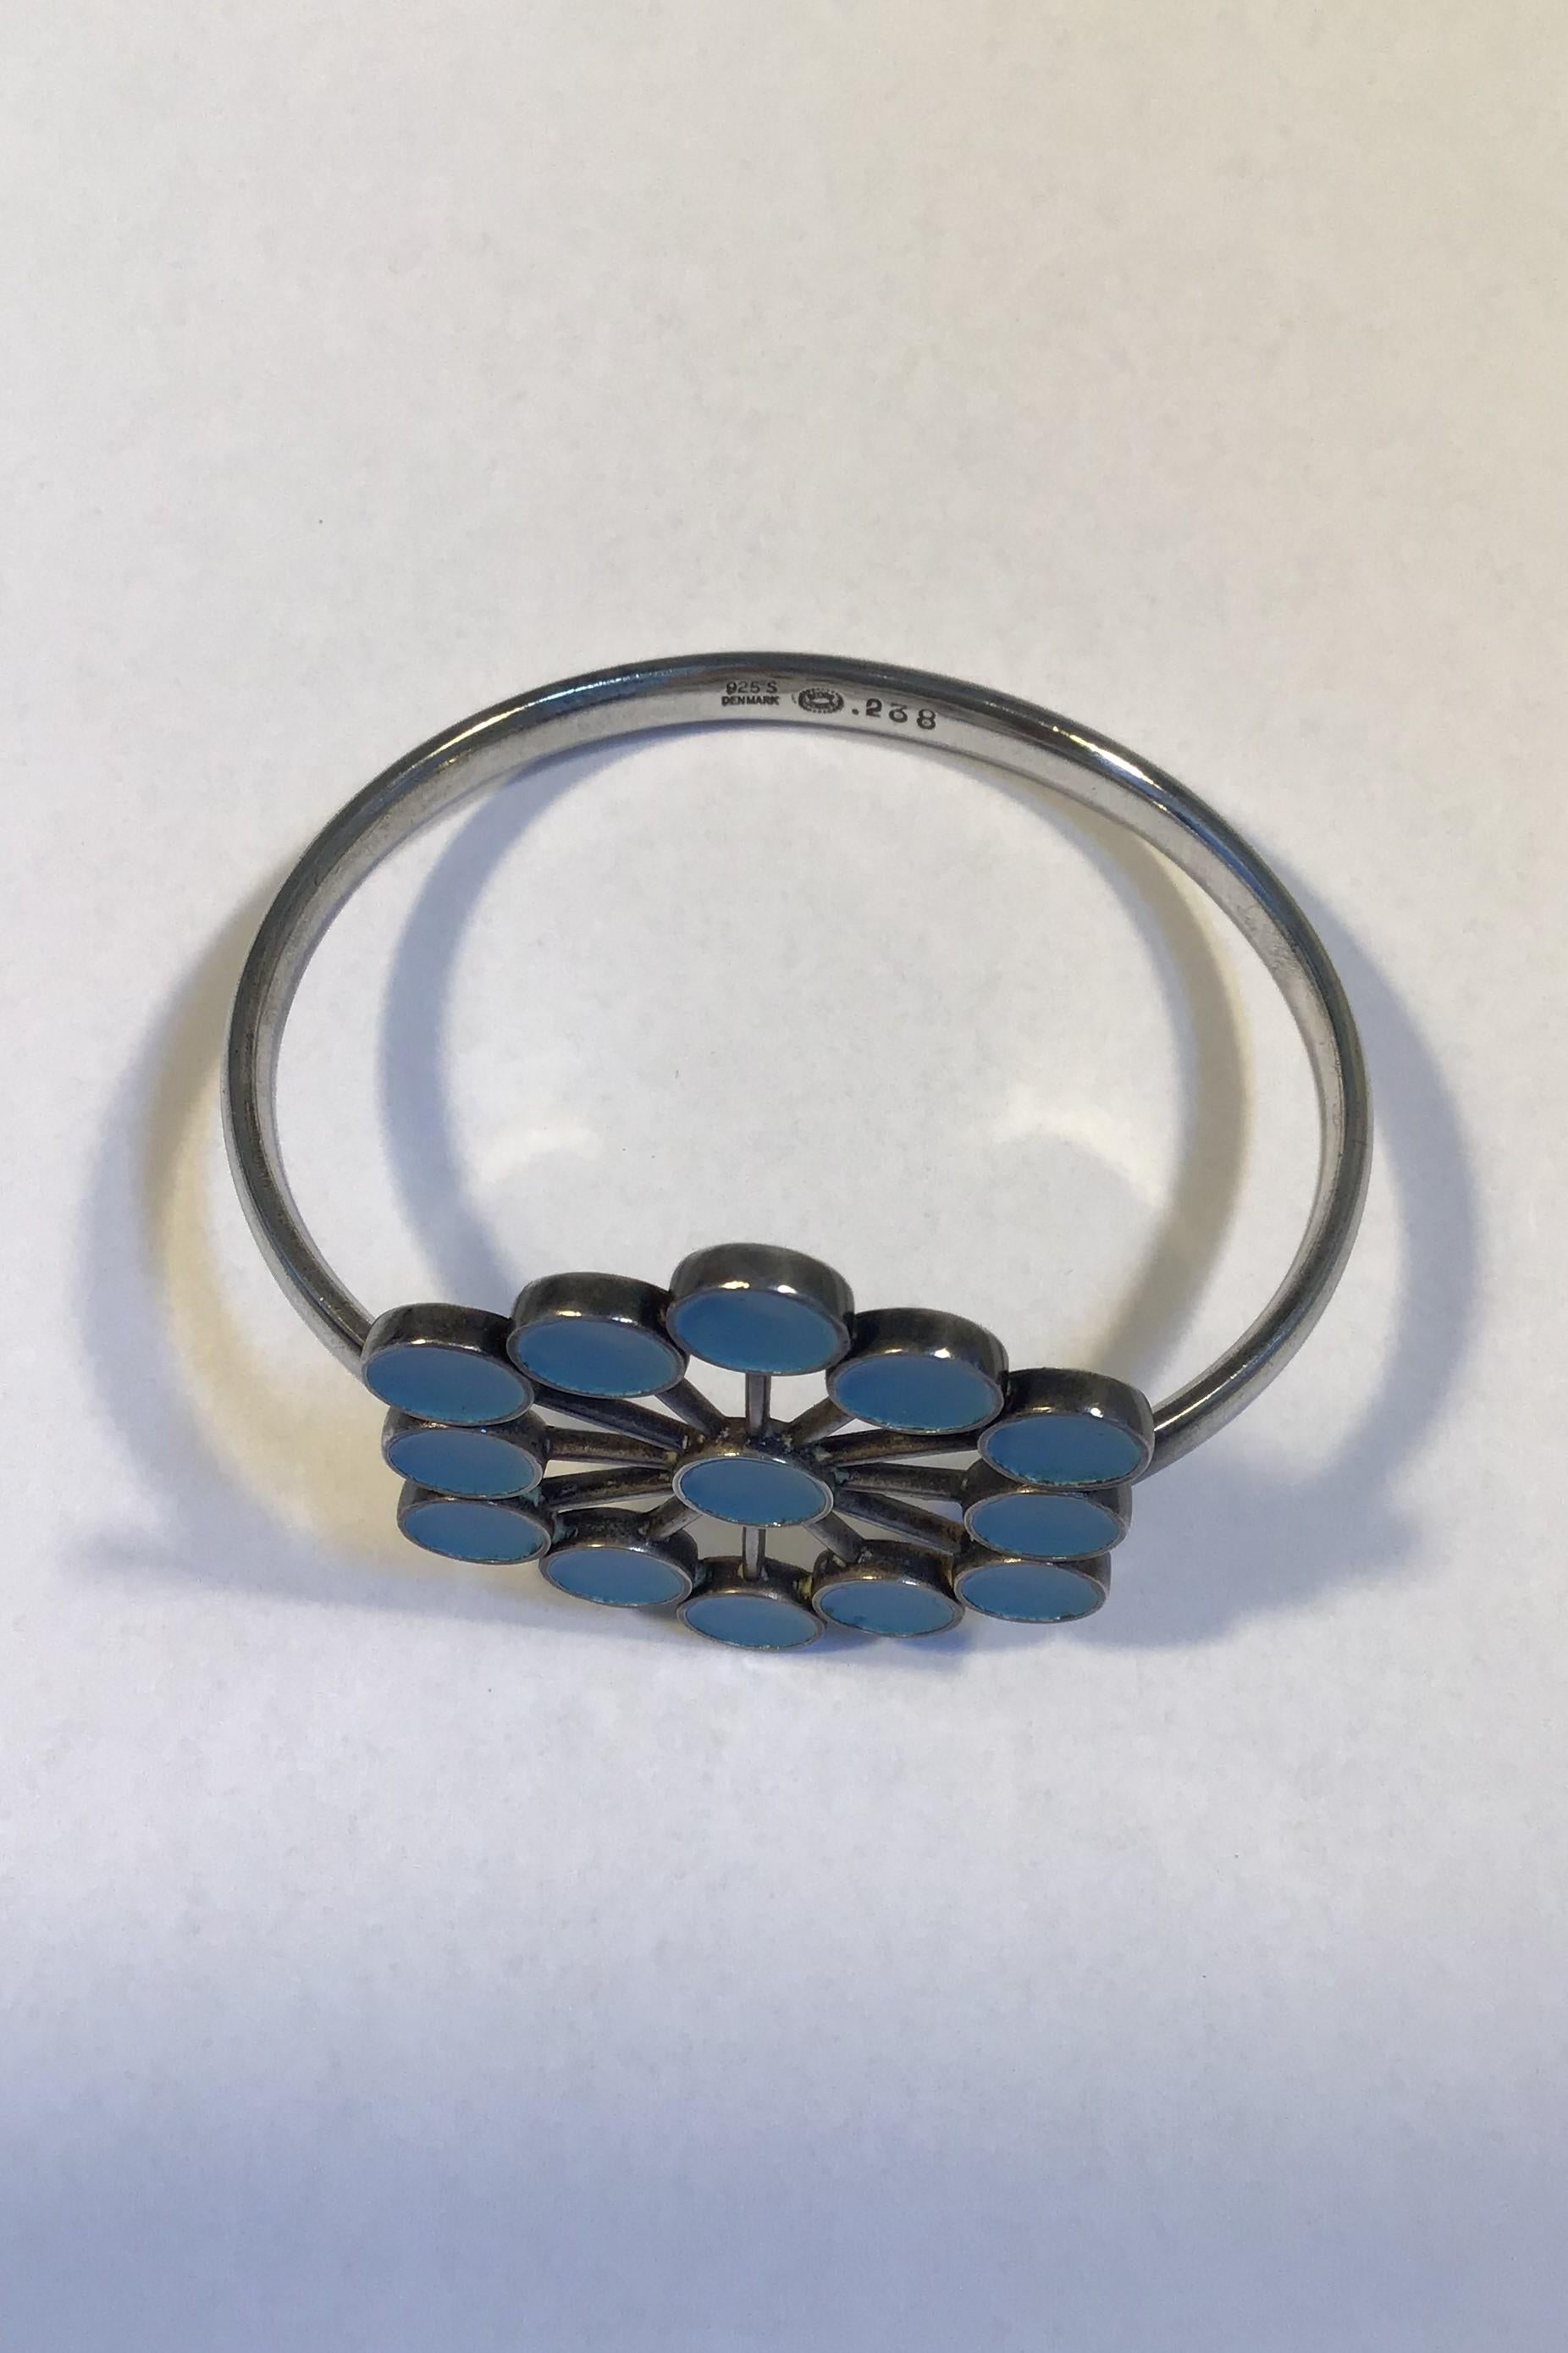 Georg Jensen Sterling Silver Arm Ring with Enamel No 238 Design Astrid Fog Inside Diameter 6.4 cm(2.51 in) Weight 43.8 gr/1.54 oz